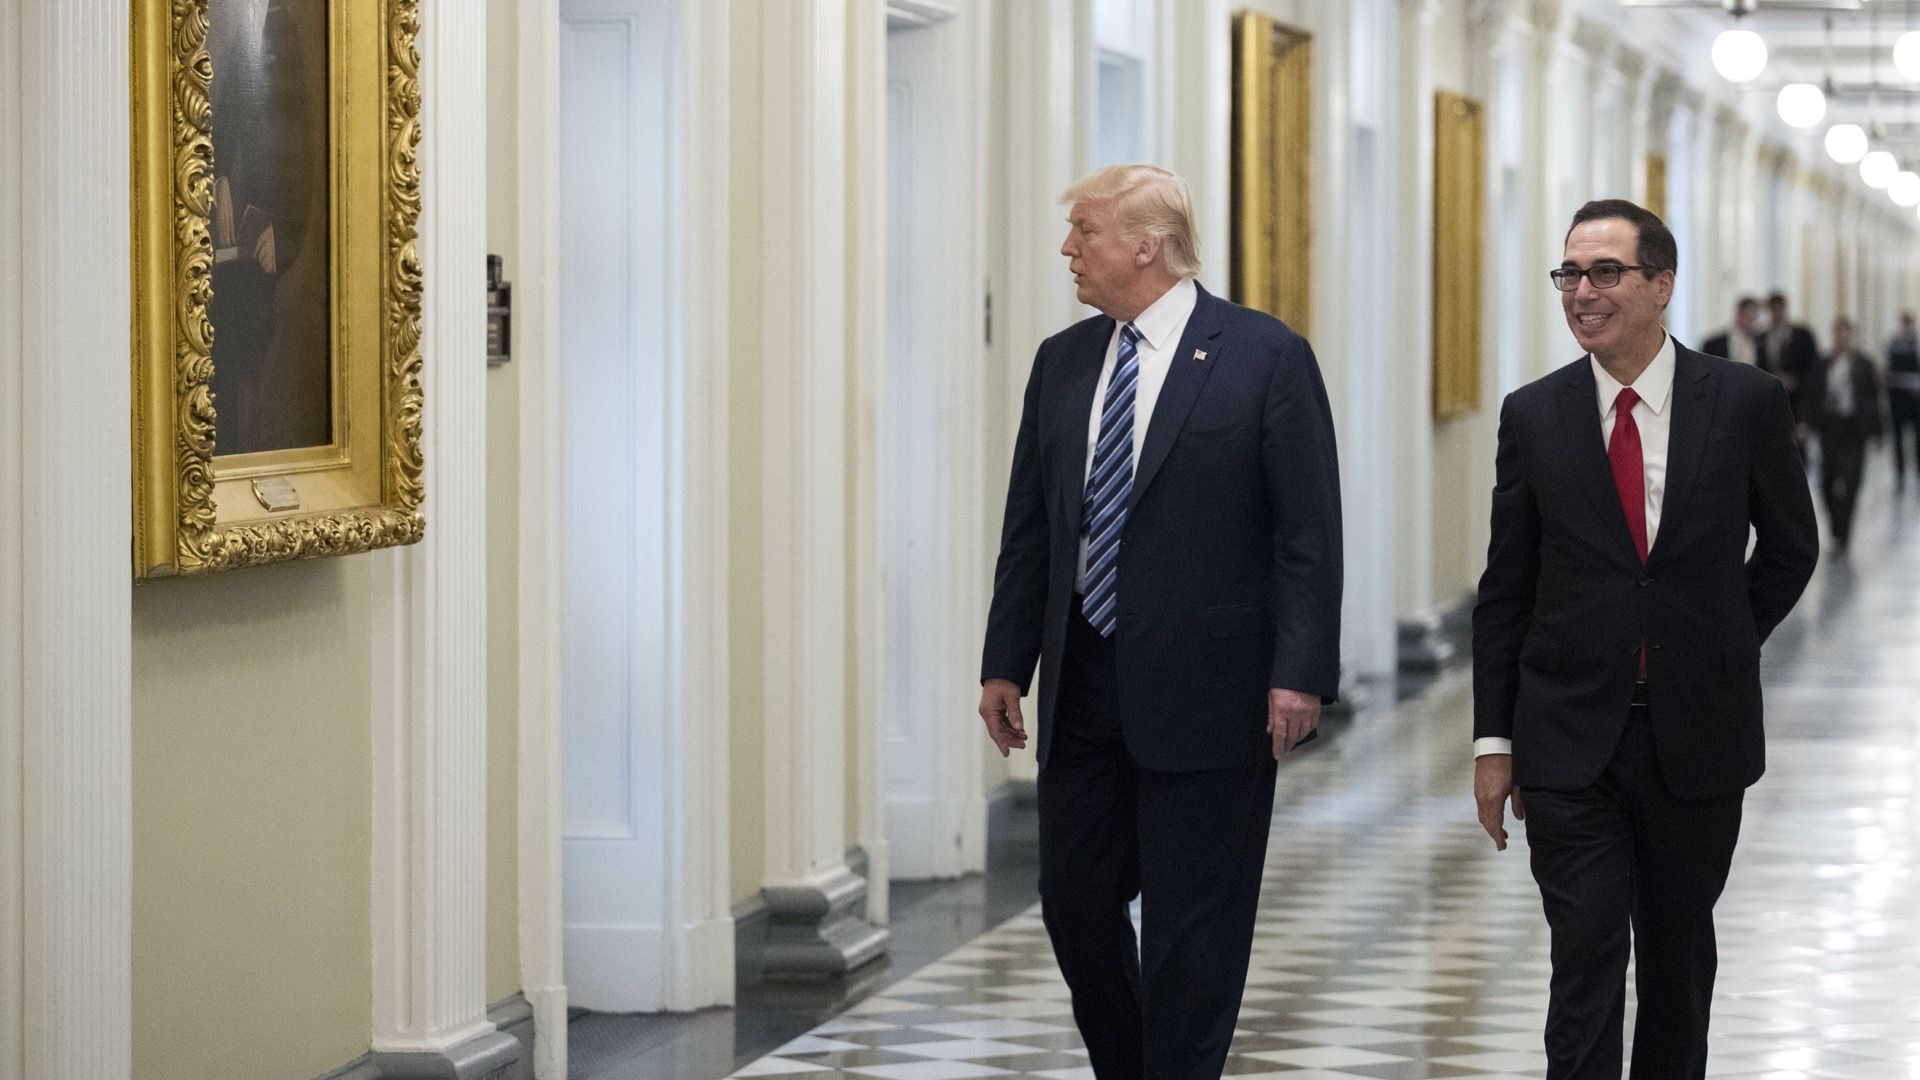 Treasury Secretary Steven Mnuchin walks down a hallway with President Trump